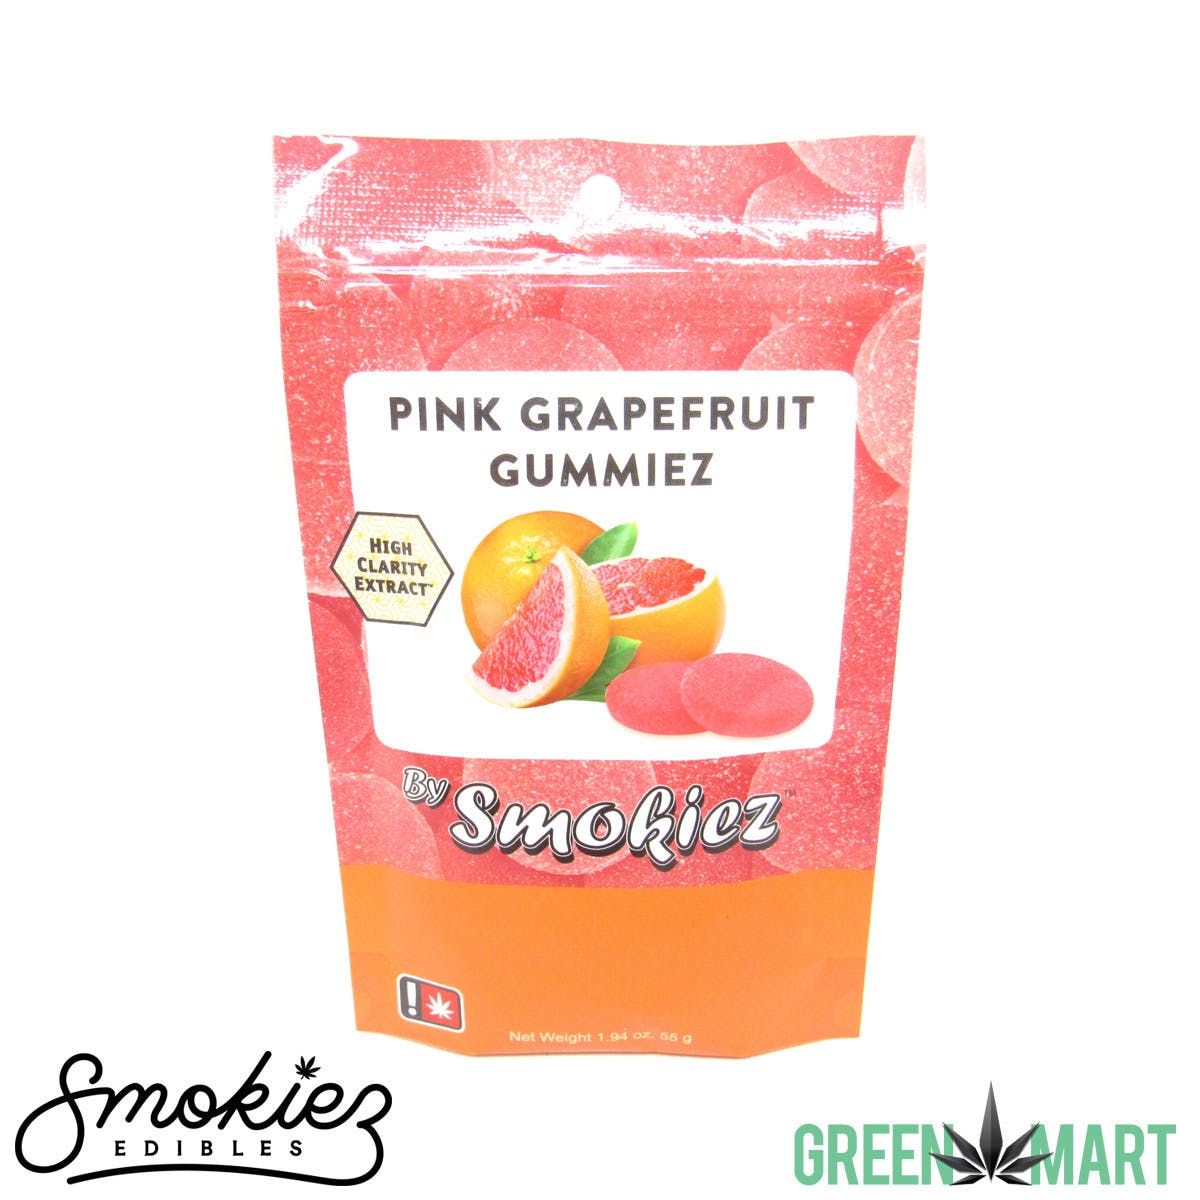 edible-smokiez-gummiez-pink-grapefruit